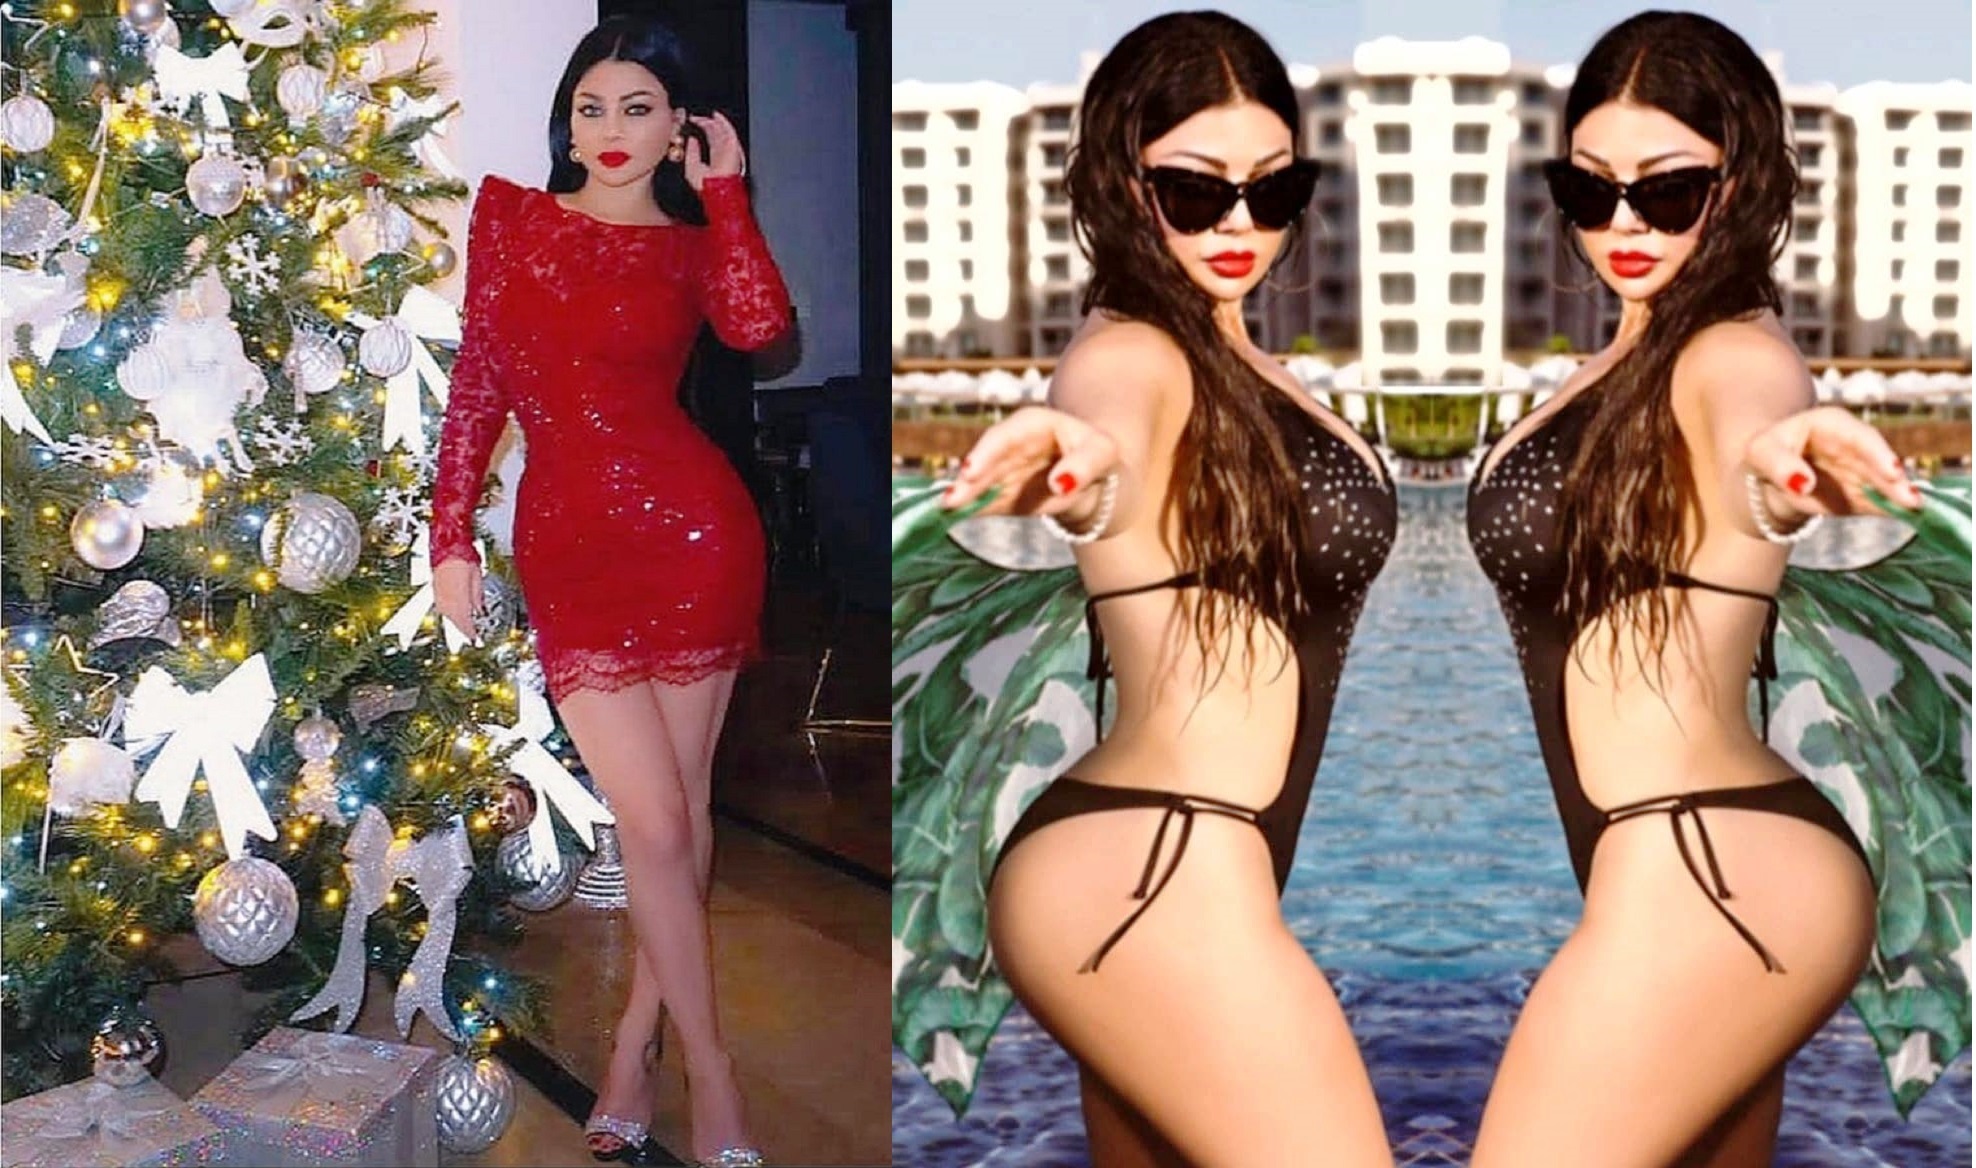 haifa wehbe bikini sorted by. relevance. 